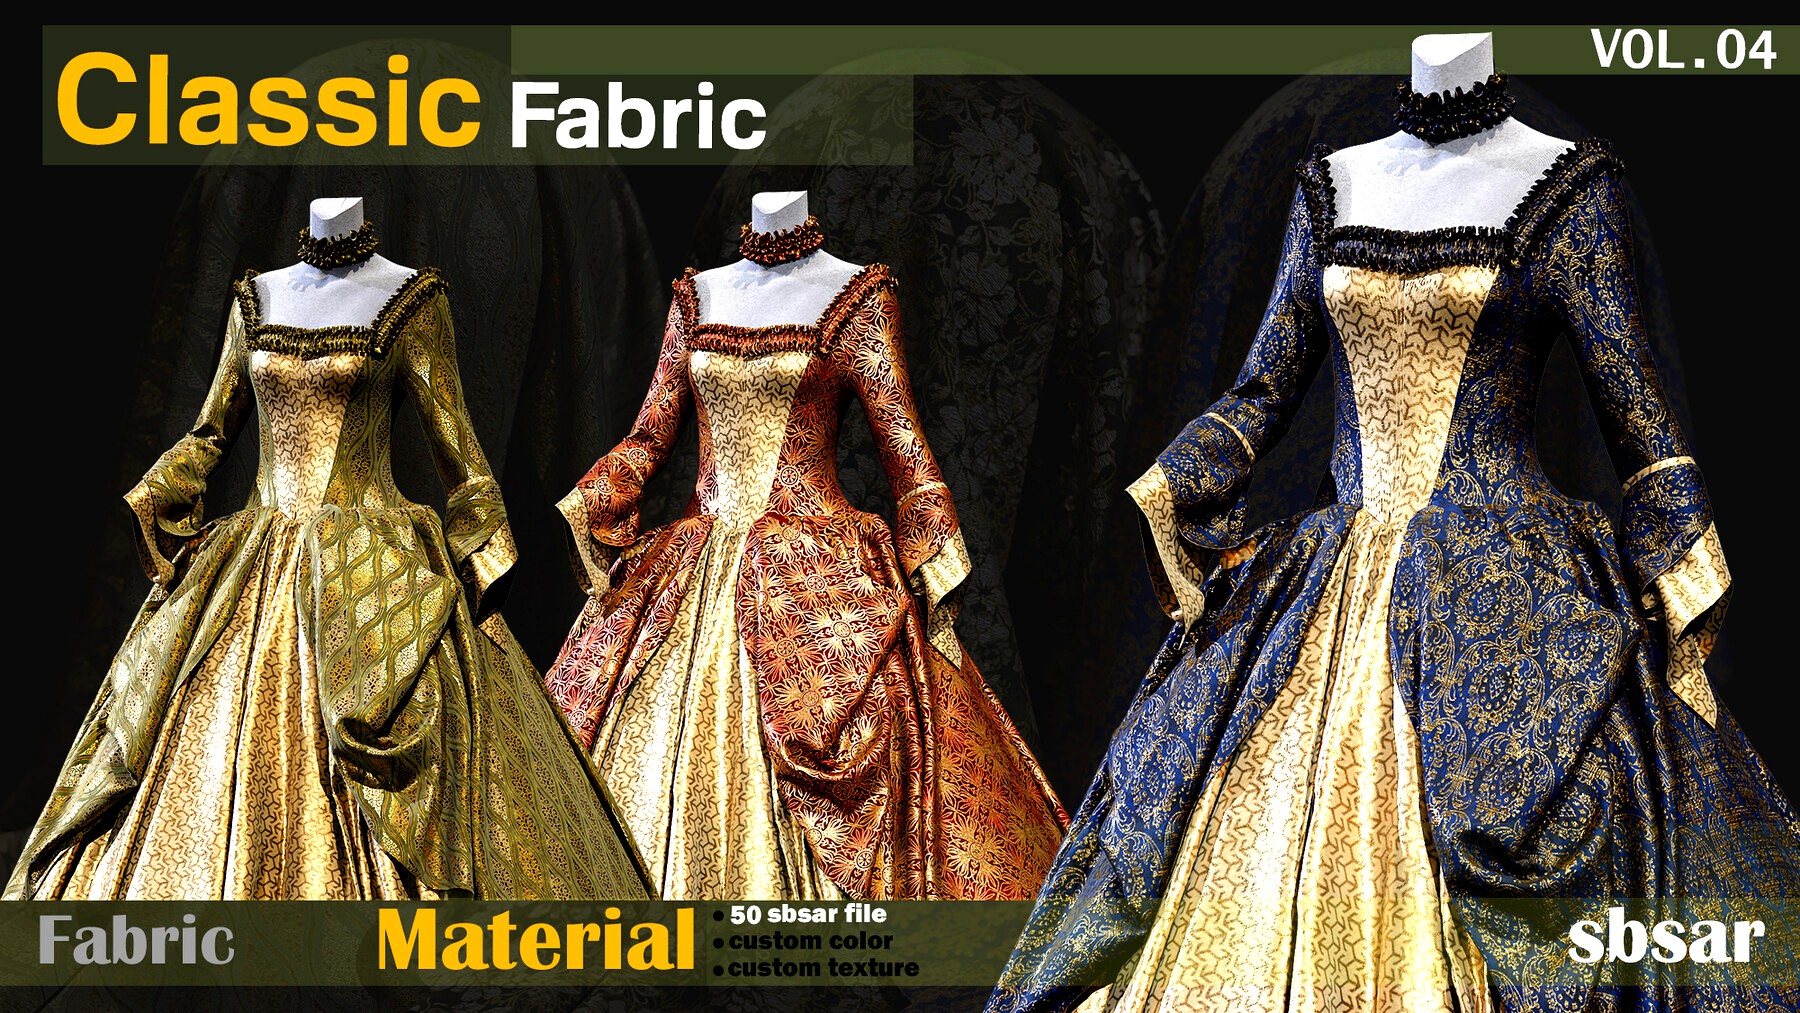 Classic Fabric Material -SBSAR -custom color -custom fabric texture -4K -VOL 04